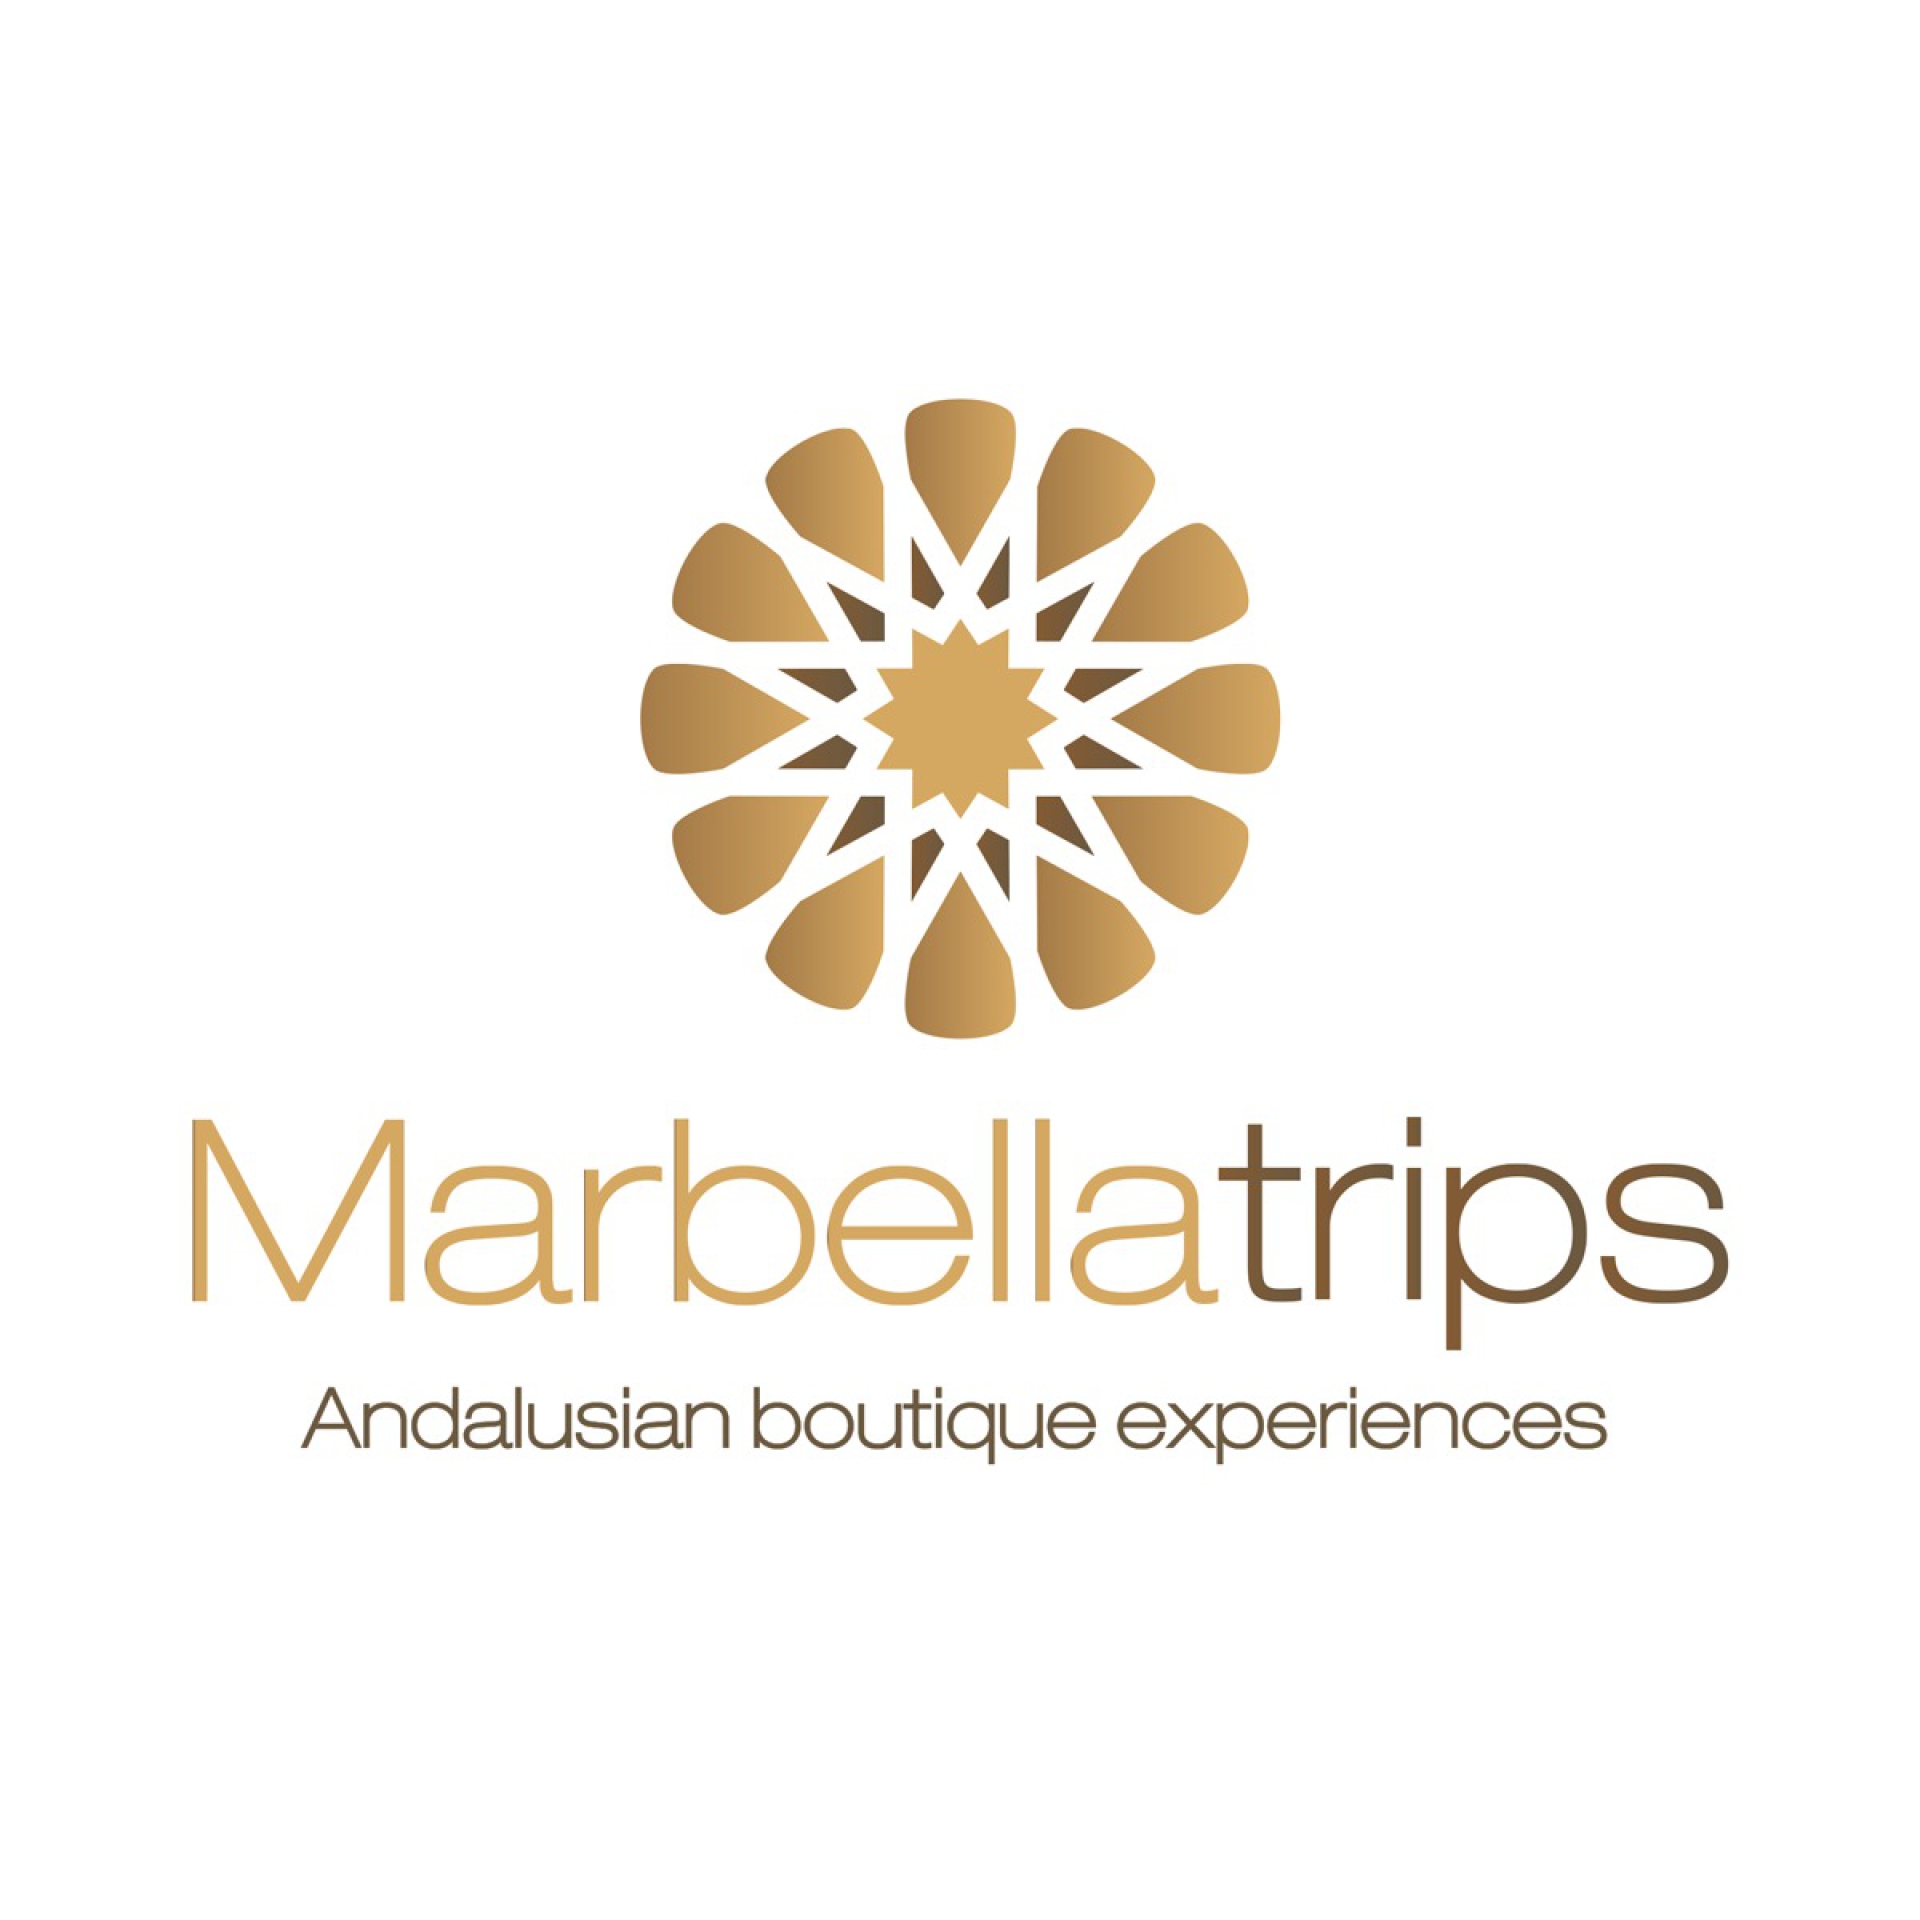 Marbellatrips